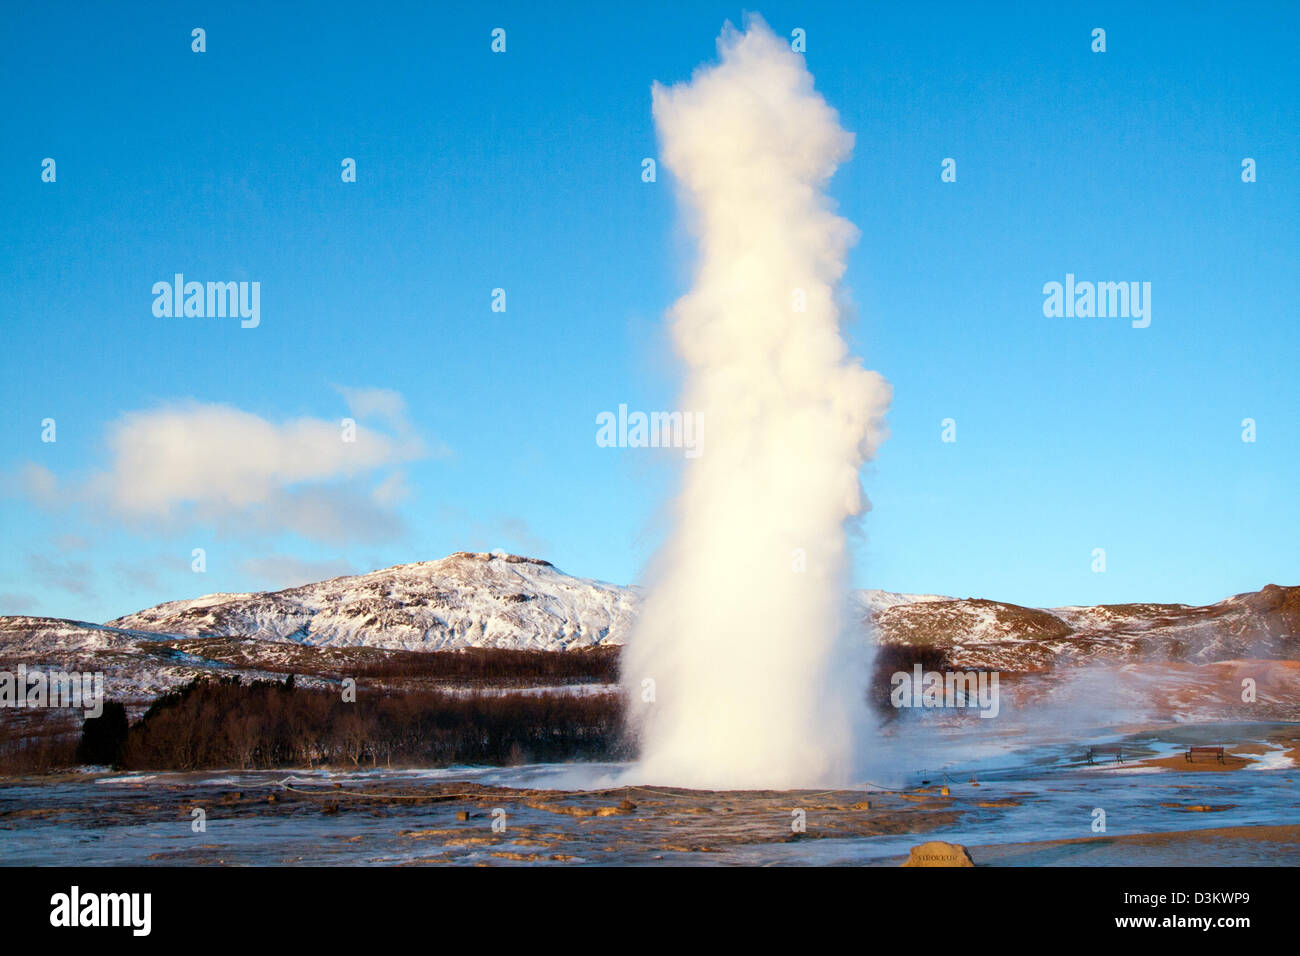 Geyser in Iceland erupting Stock Photo